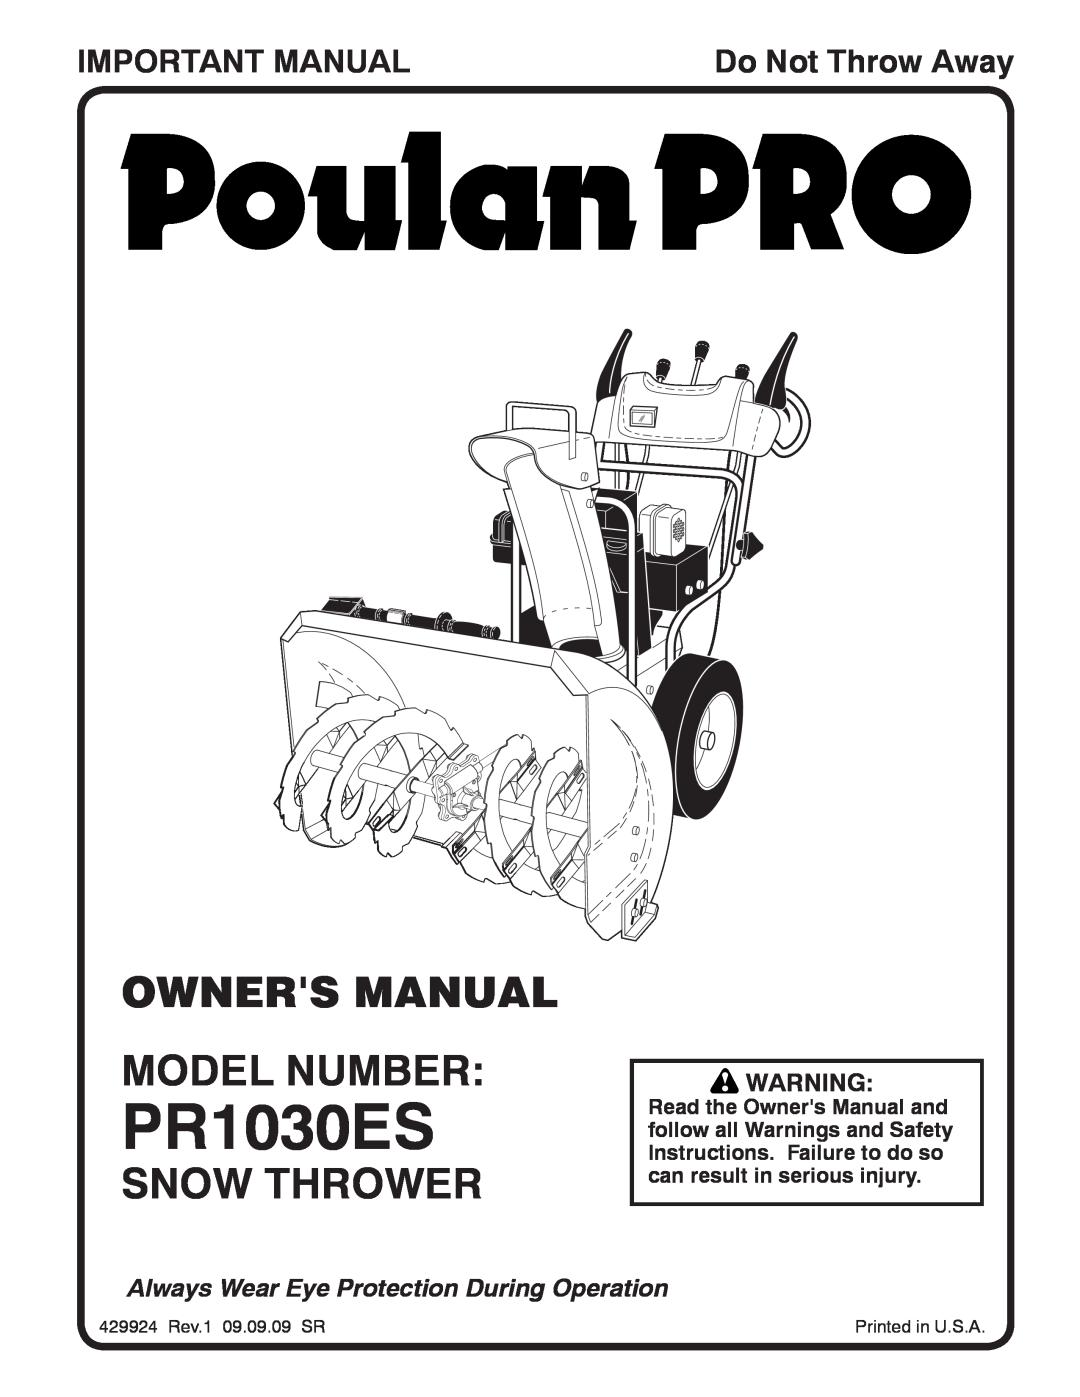 Poulan 96192003101, 429924 owner manual Snow Thrower, Important Manual, PR1030ES, Do Not Throw Away 